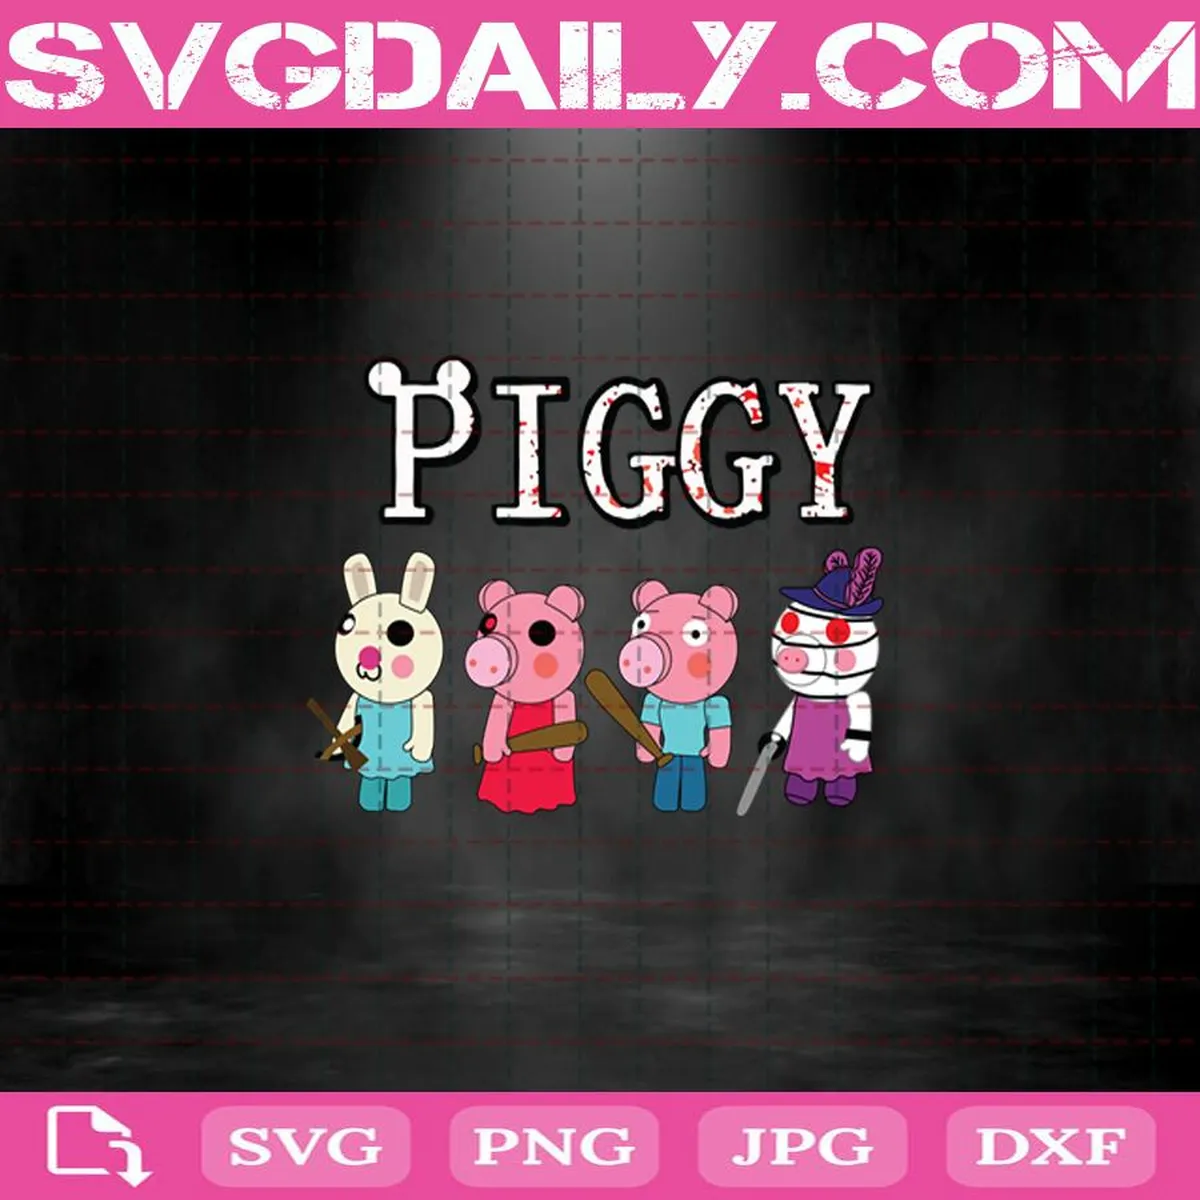 Piggy Roblox Svg, Roblox Game Svg, Roblox Characters Svg, Piggy Horror Roblox Svg, Roblox Game Svg Silhouette